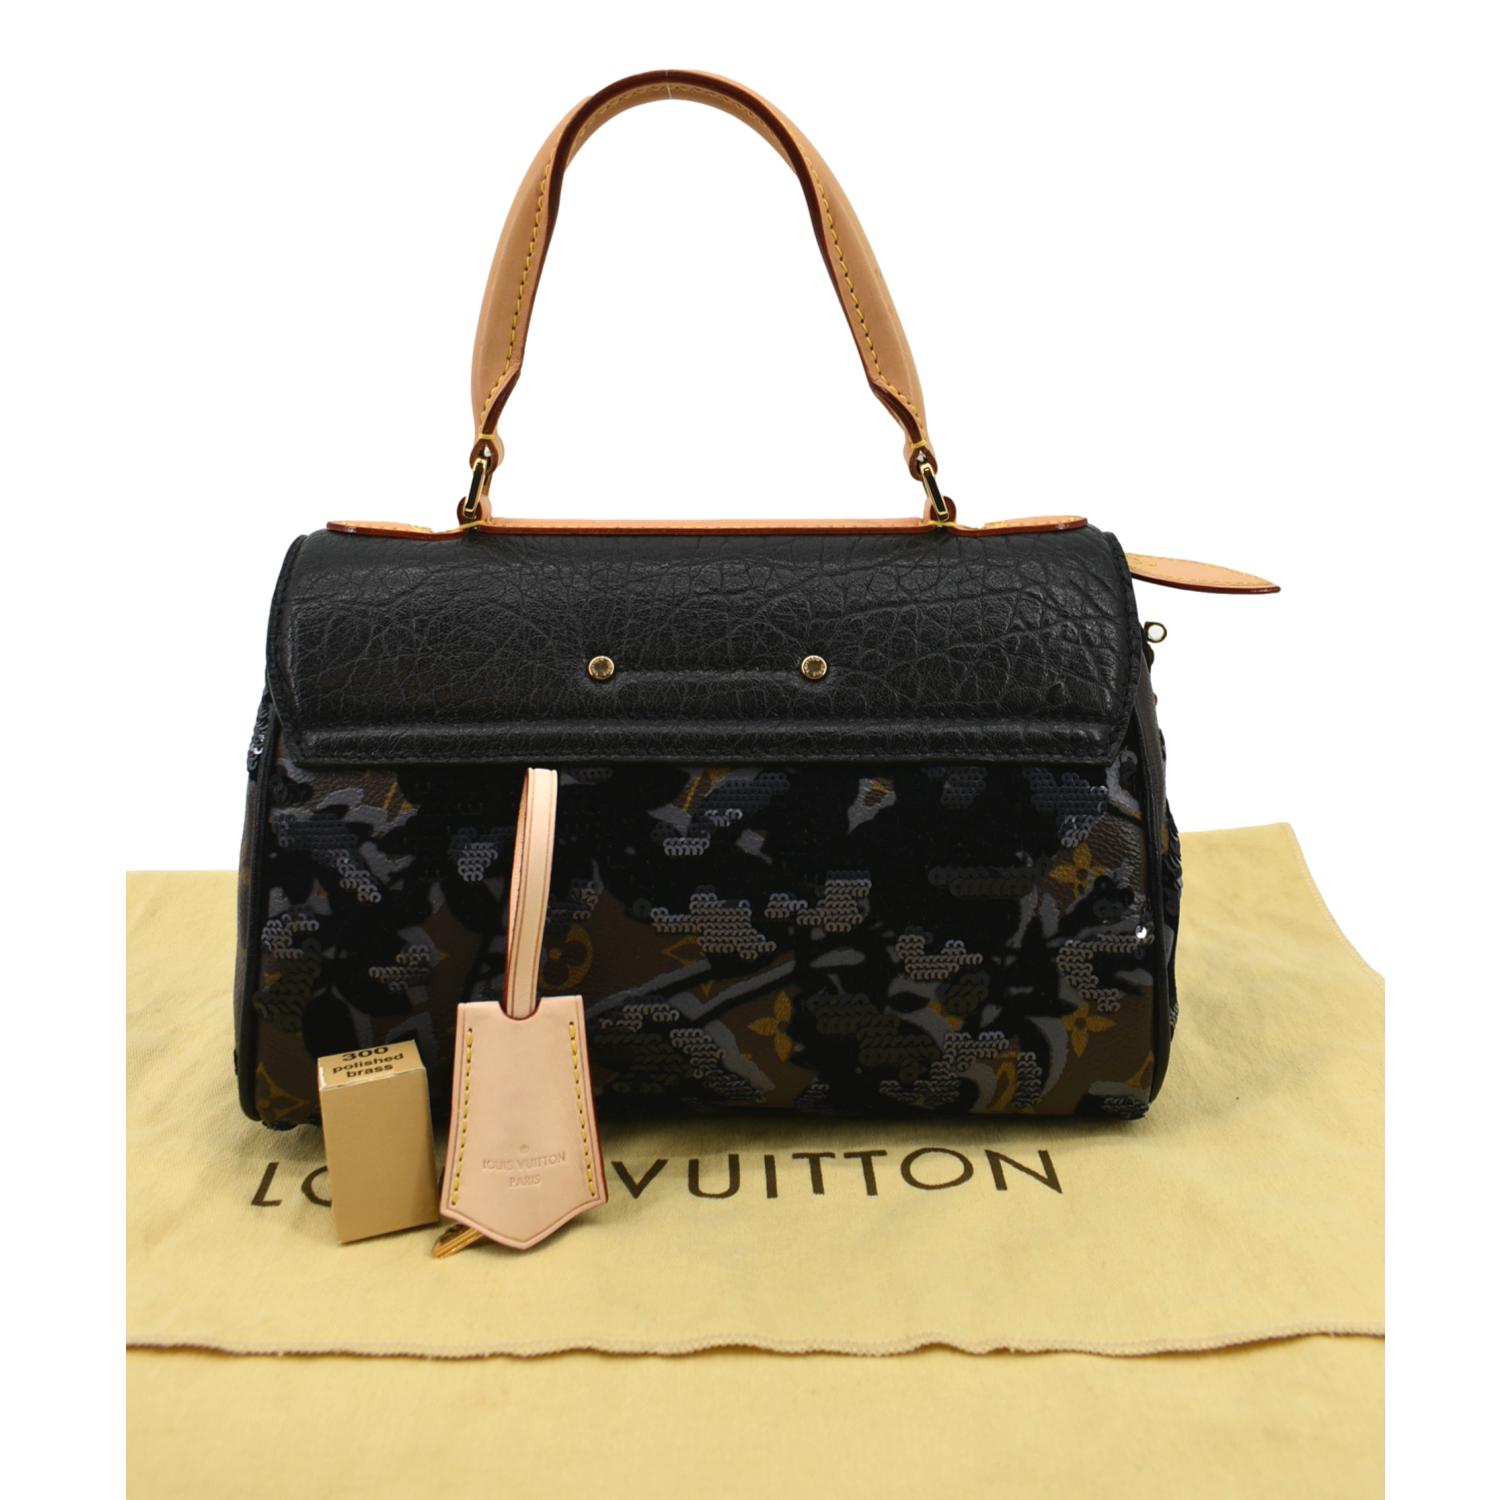 Best Louis Vuitton for Everyday Use - Fleur d'Hiver